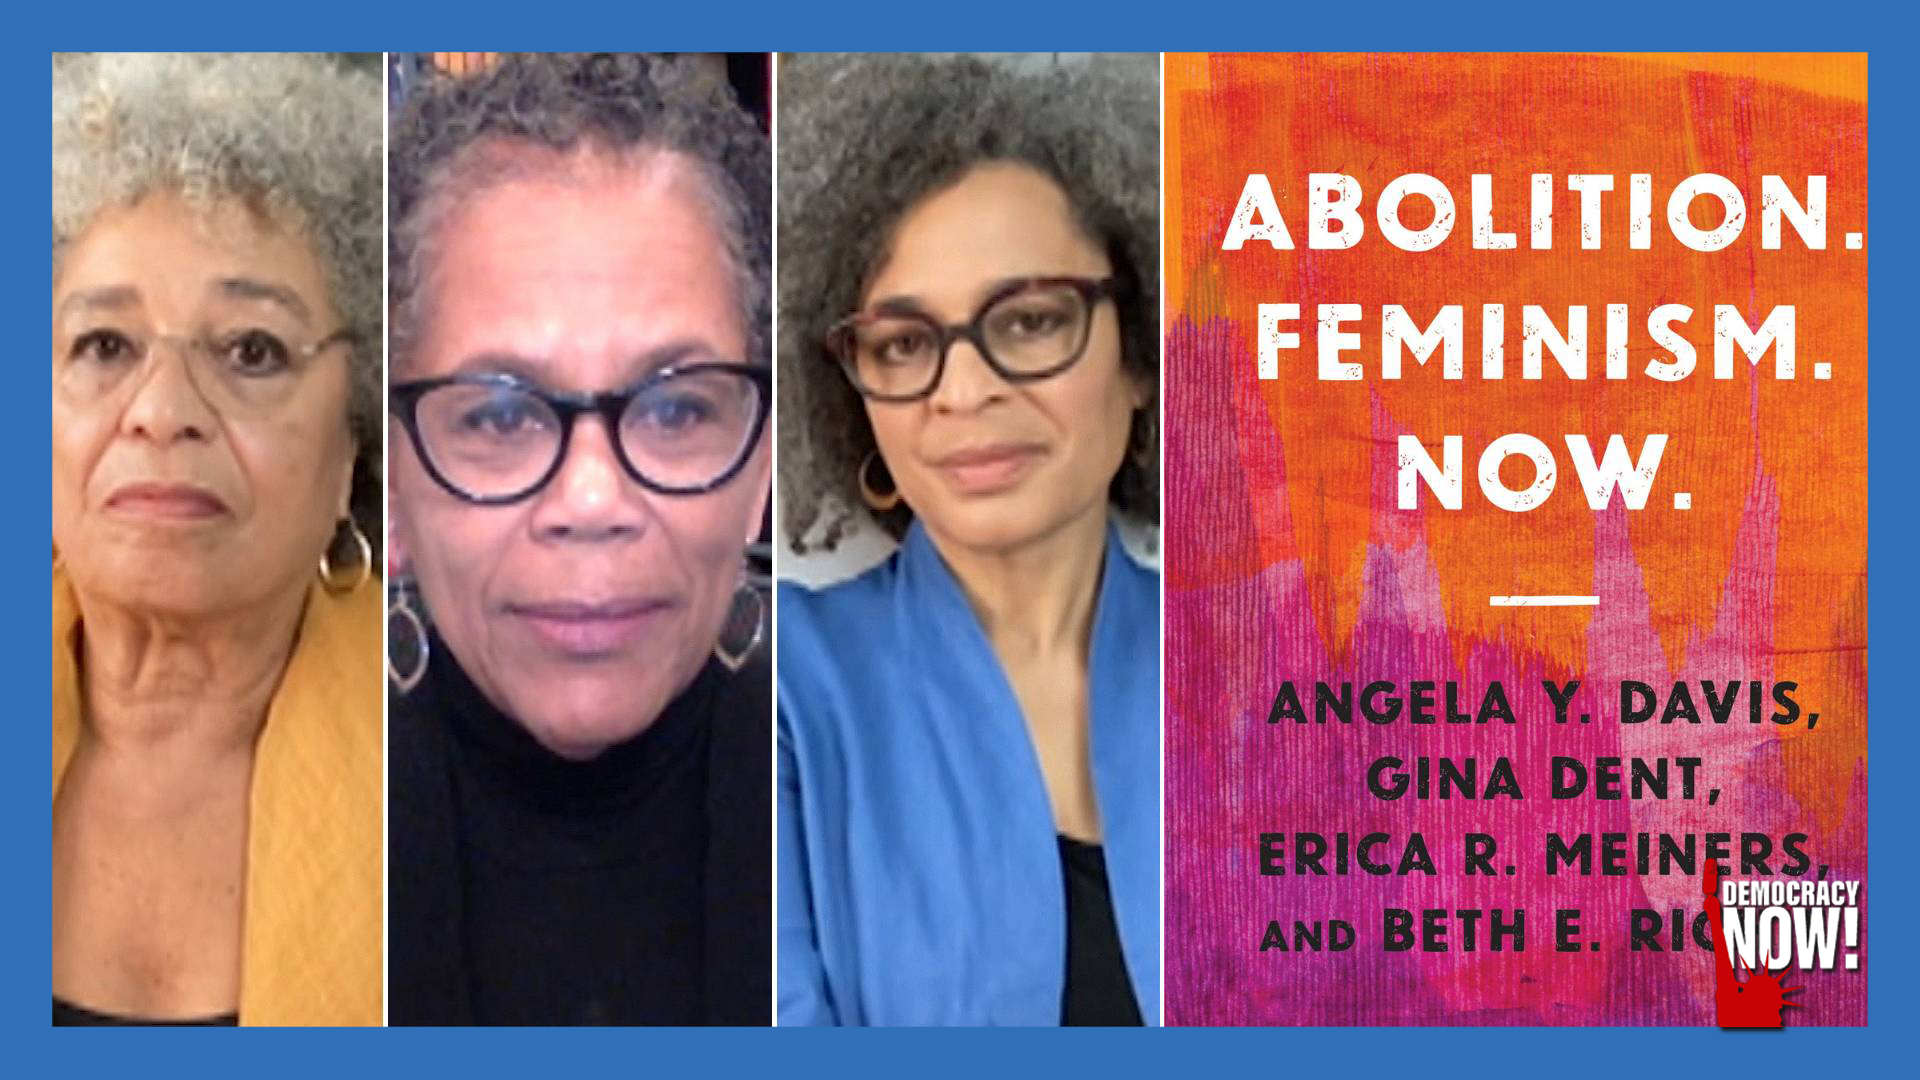 Scholars Angela Davis, Gina Dent & Beth Richie on Why the World Needs “Abolition. Feminism. Now.”